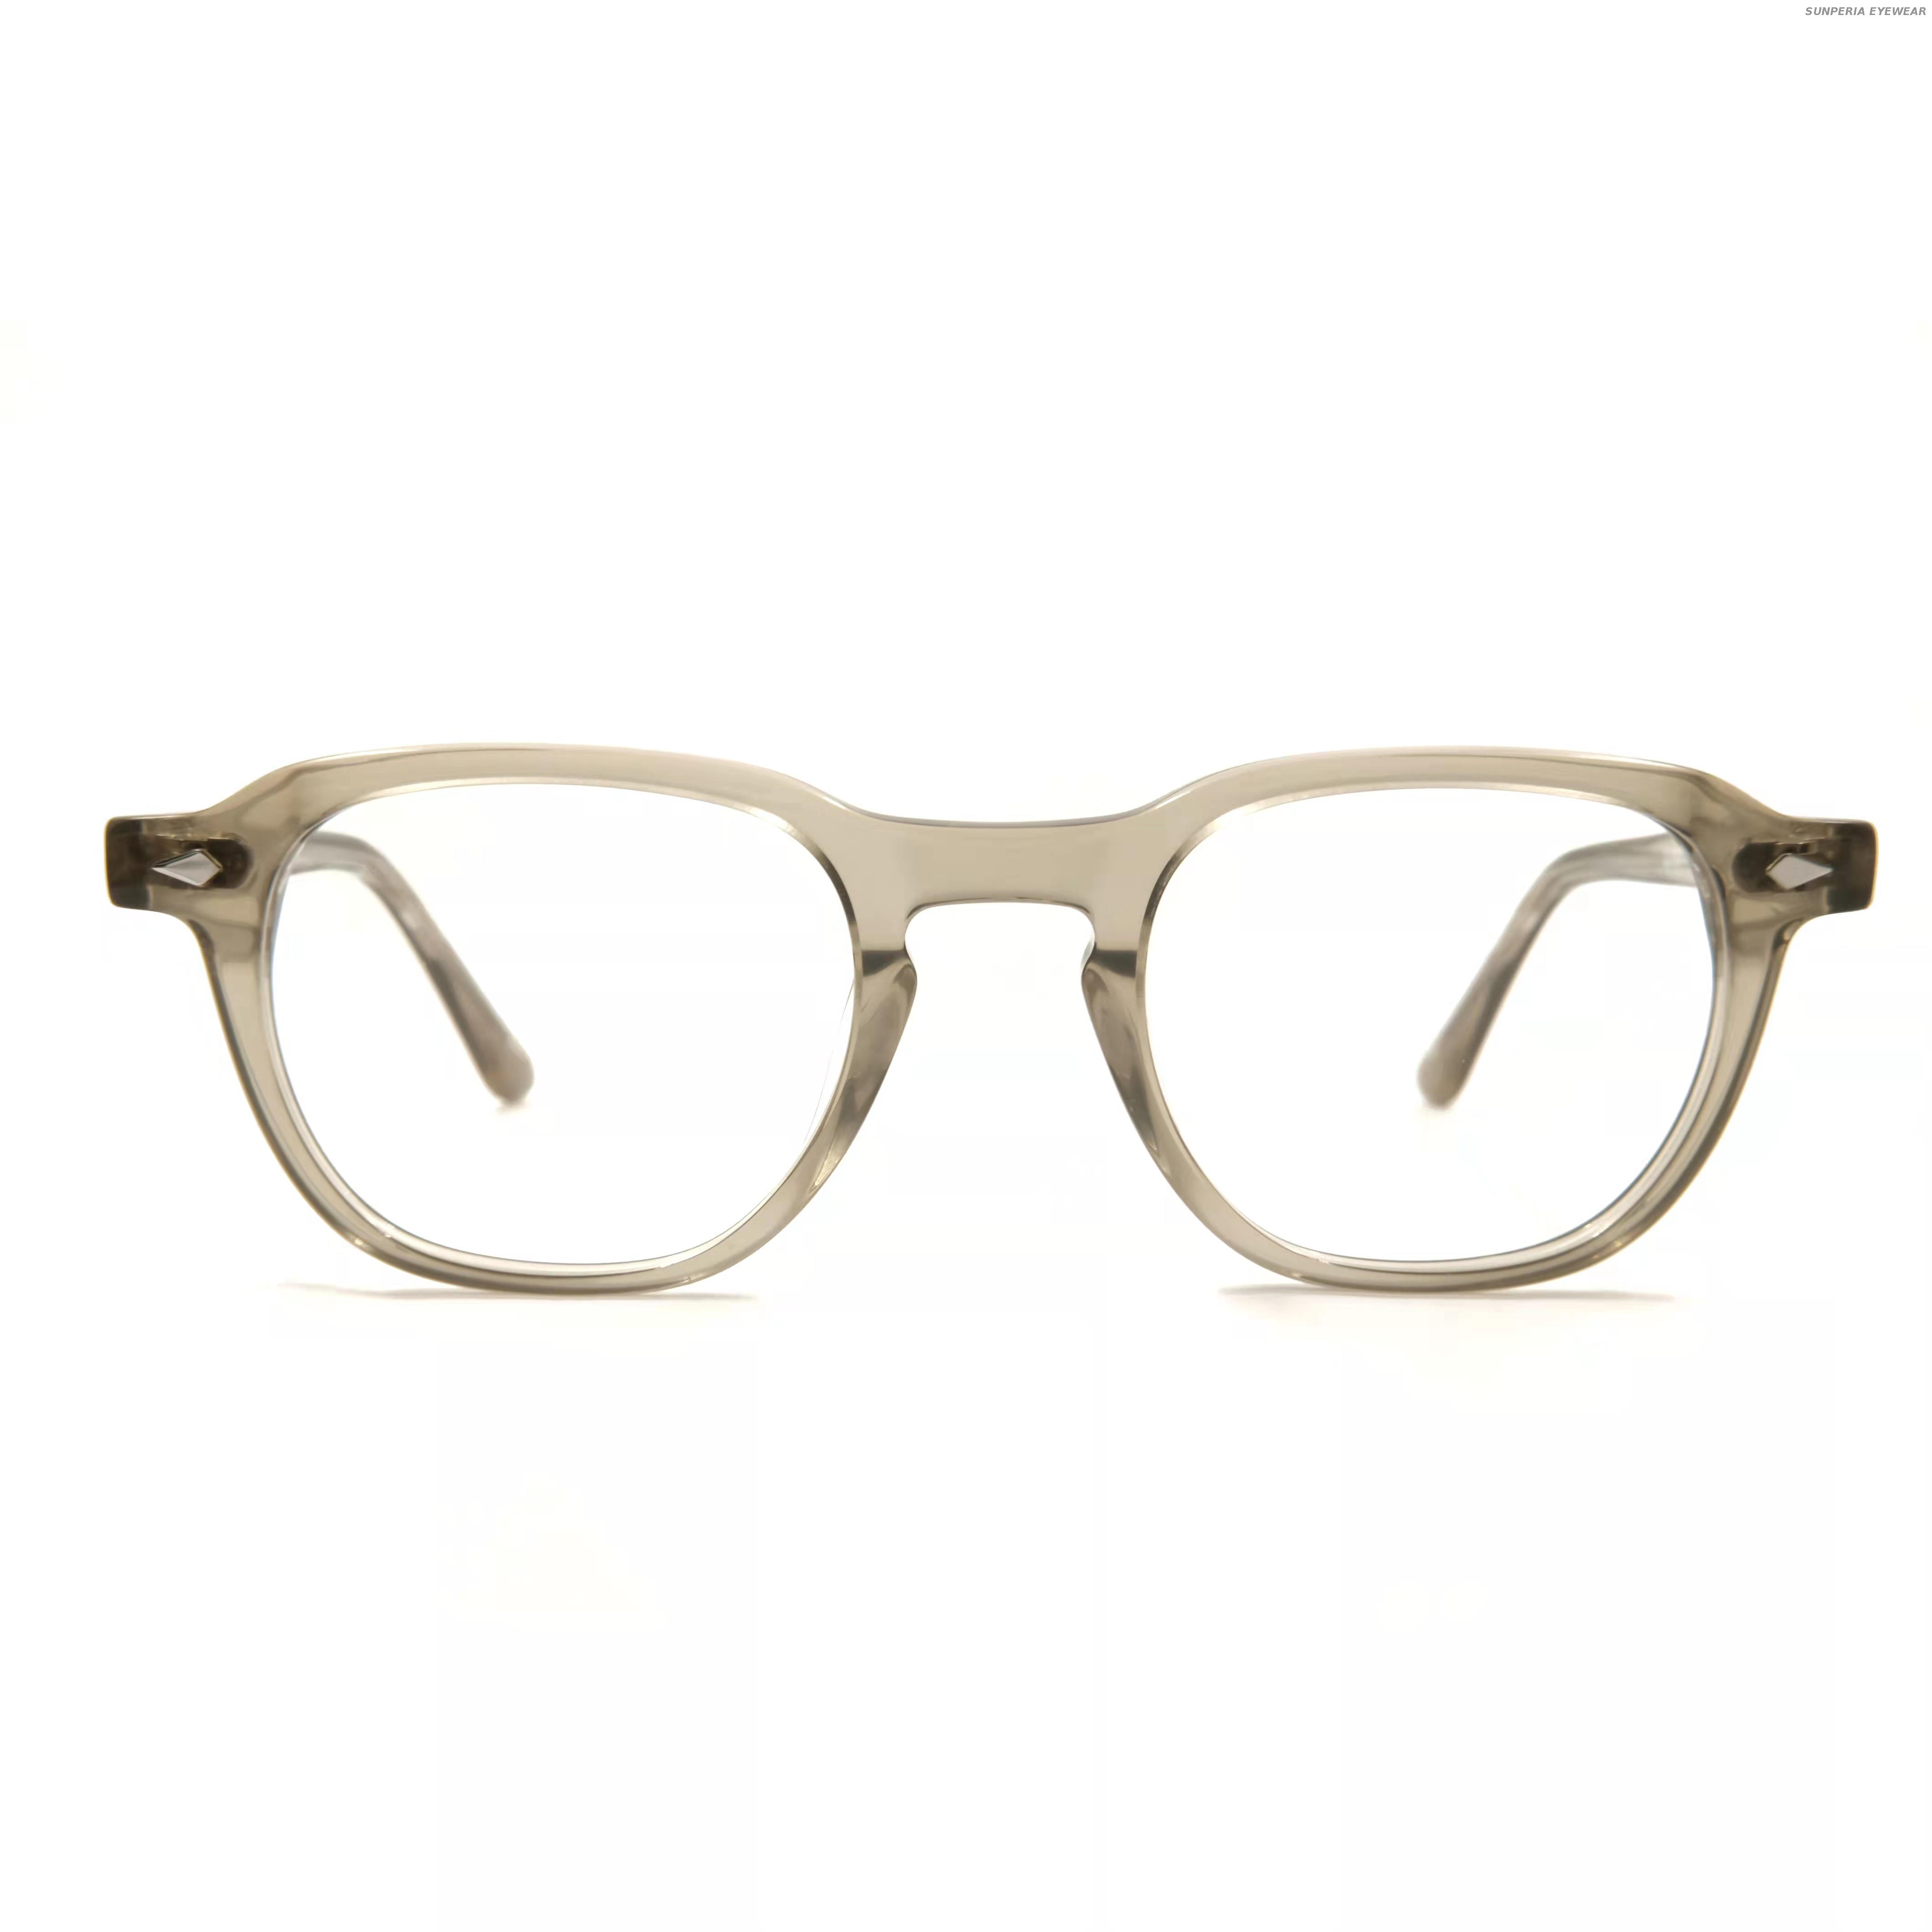 Montura óptica de acetato de café Gensun Eyewear Online Gafas Empresas Gafas Empresas